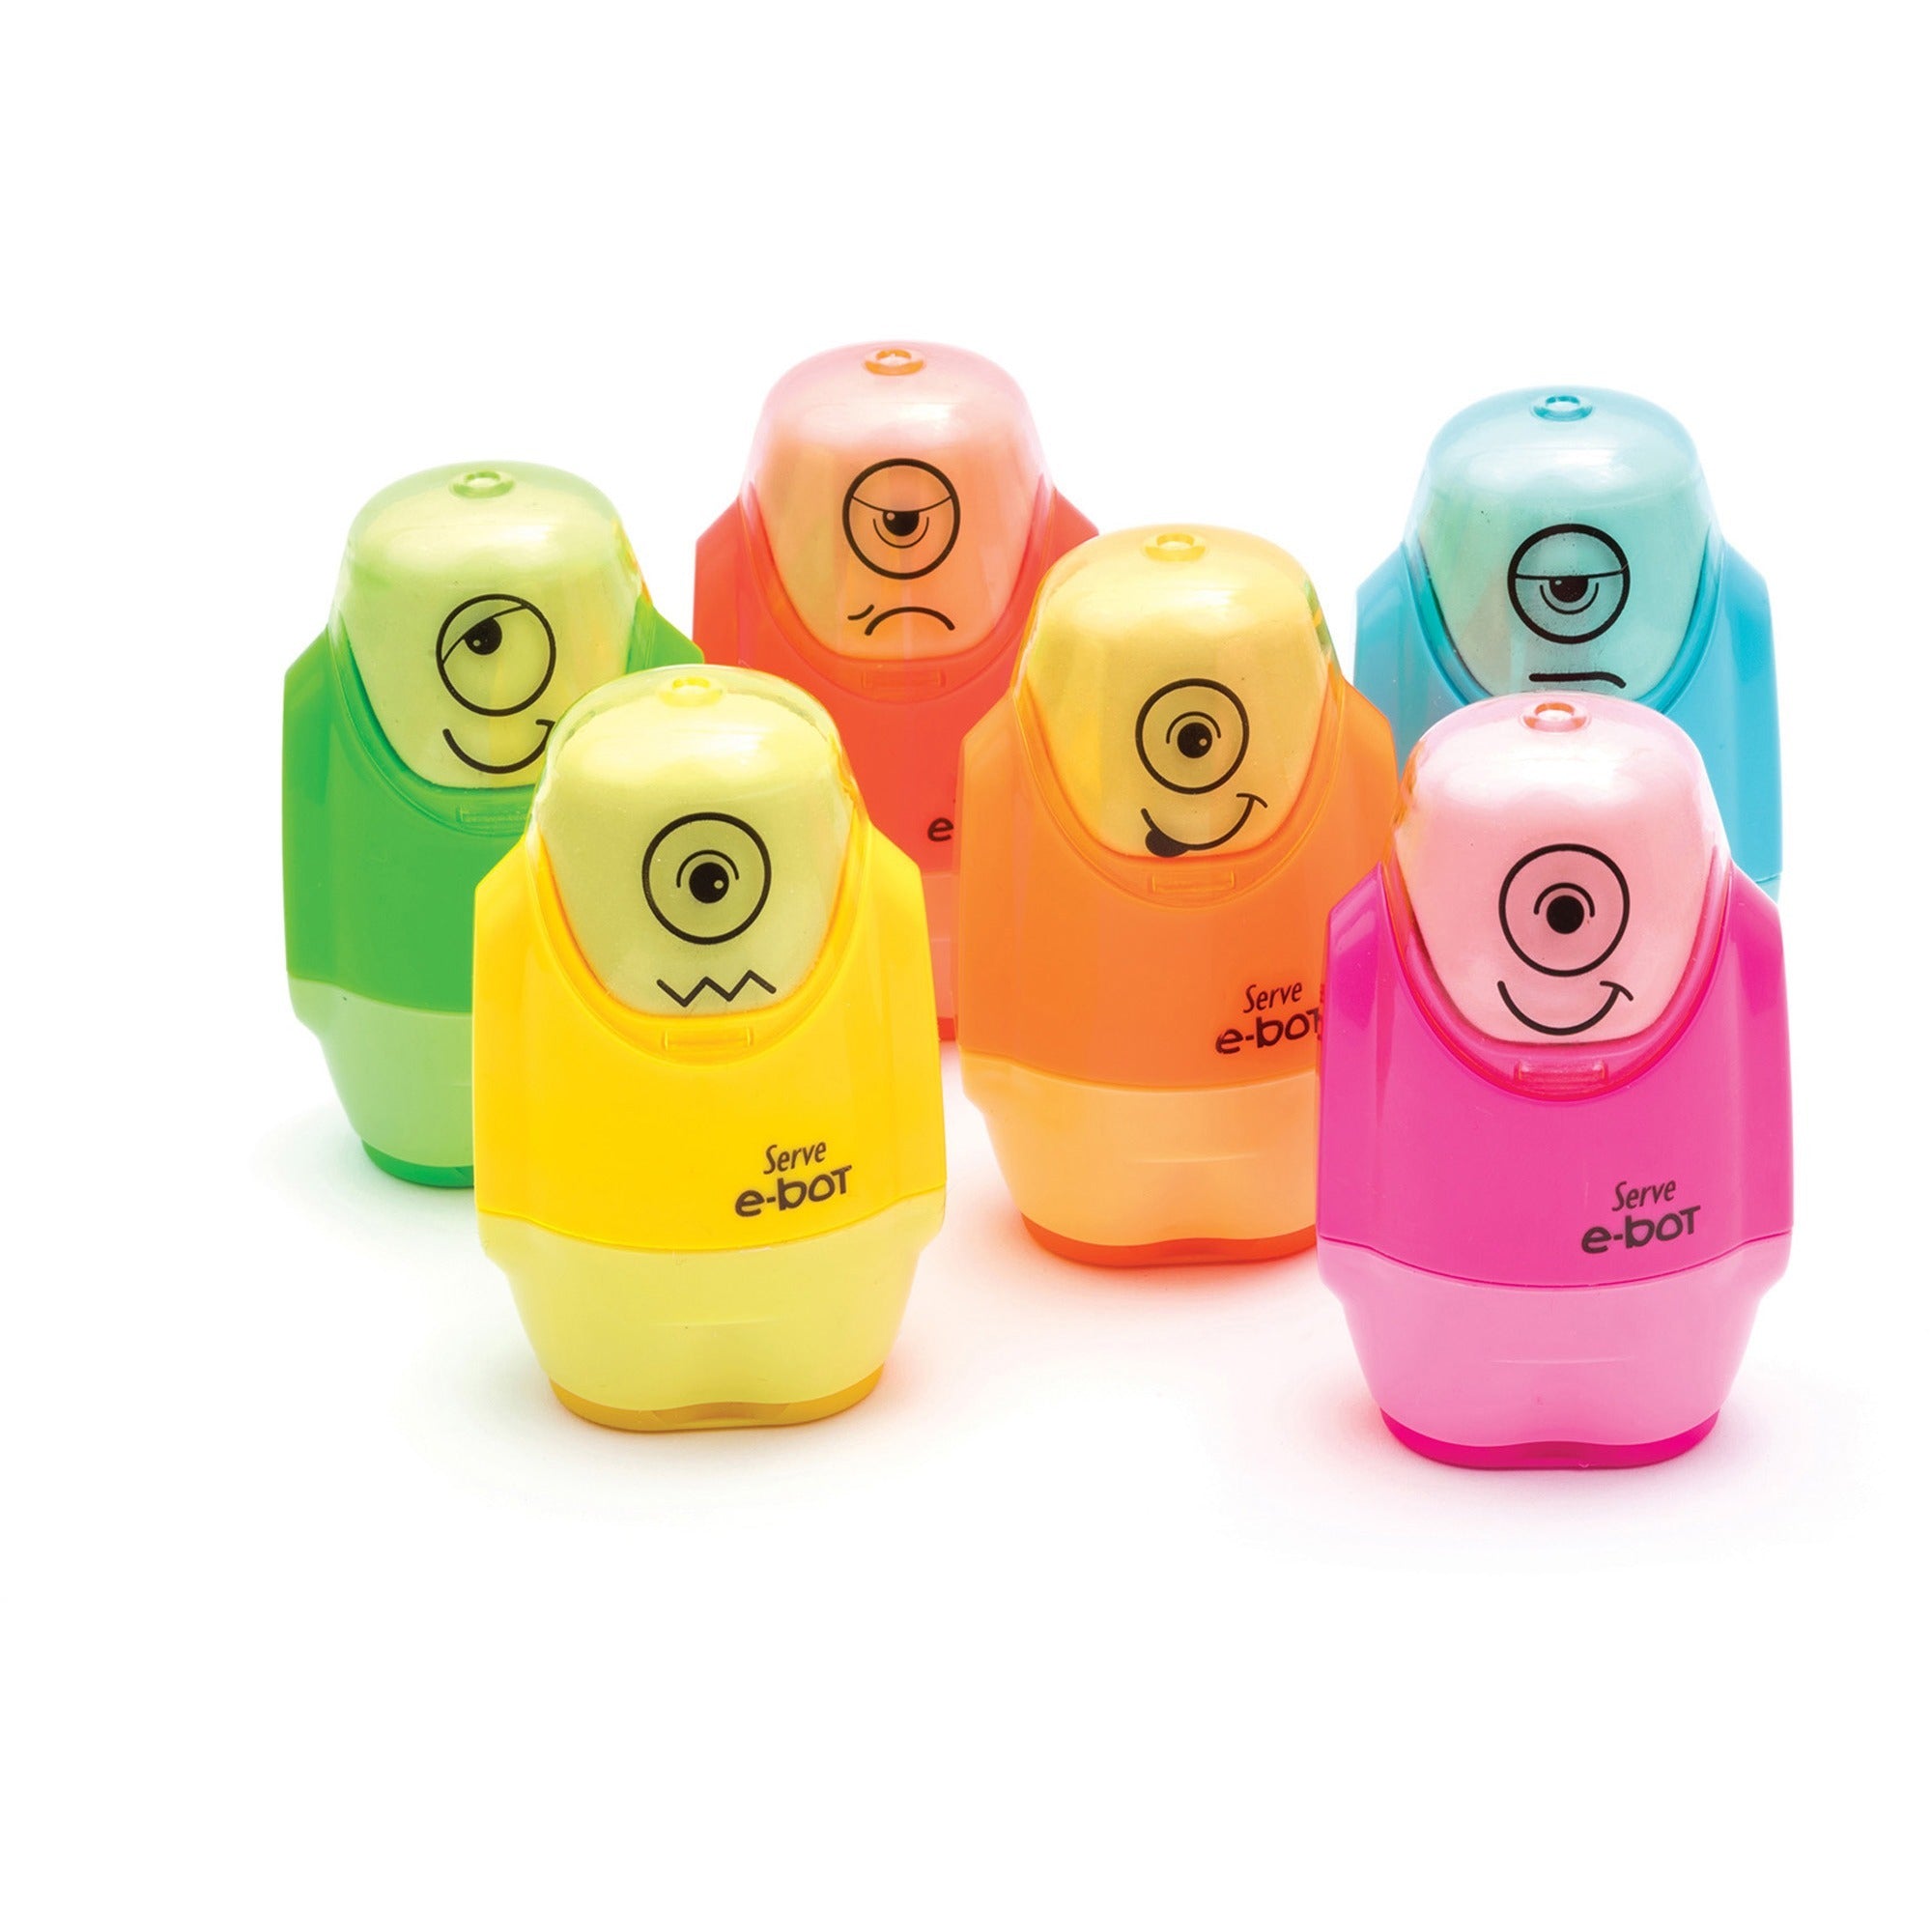 serve-e-bot-eraser-&-sharpener-2-holes-plastic-multicolor-1-each_srvebot9ktkr - 1